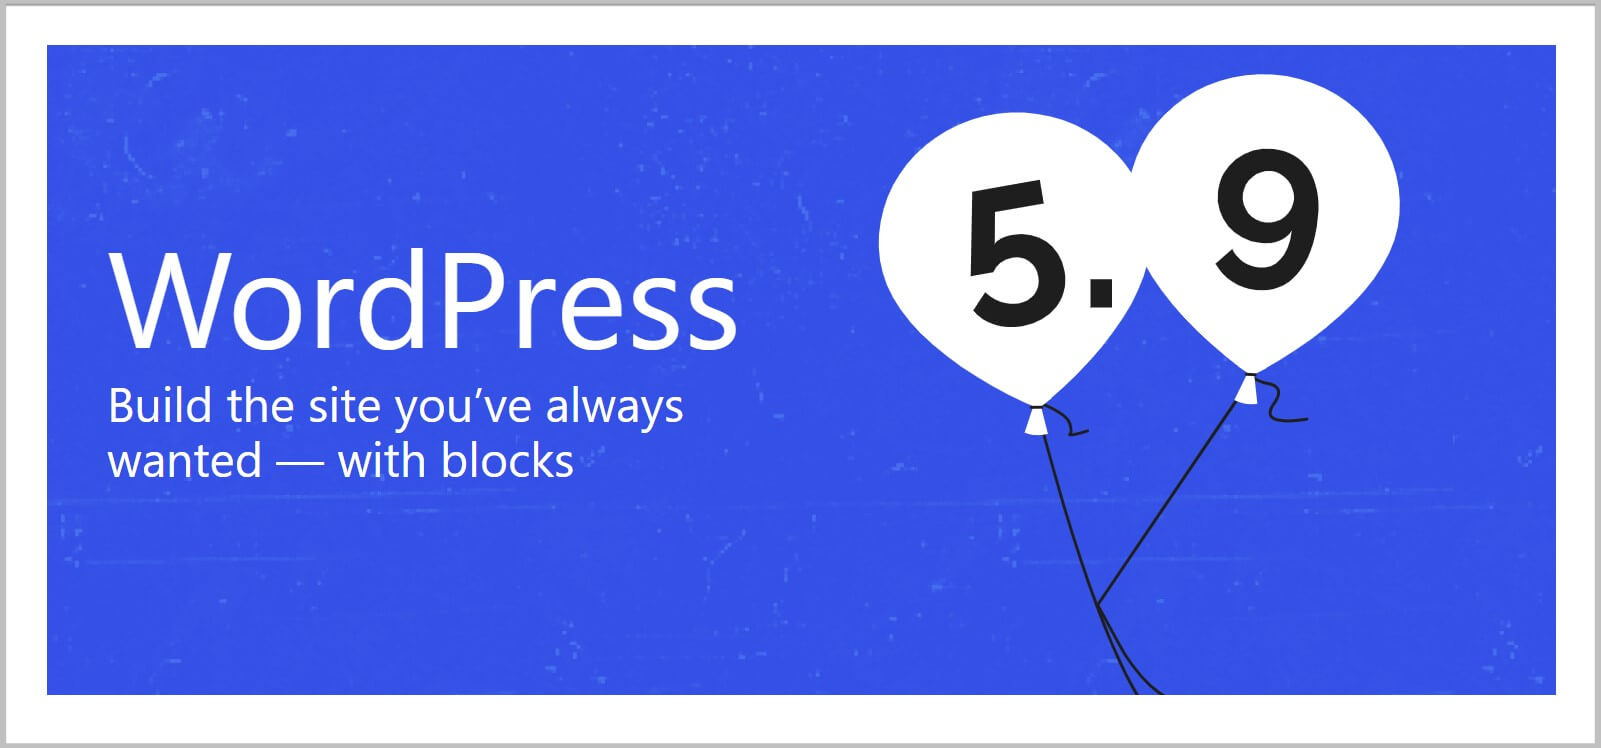 What's new in WordPress 5.9 update